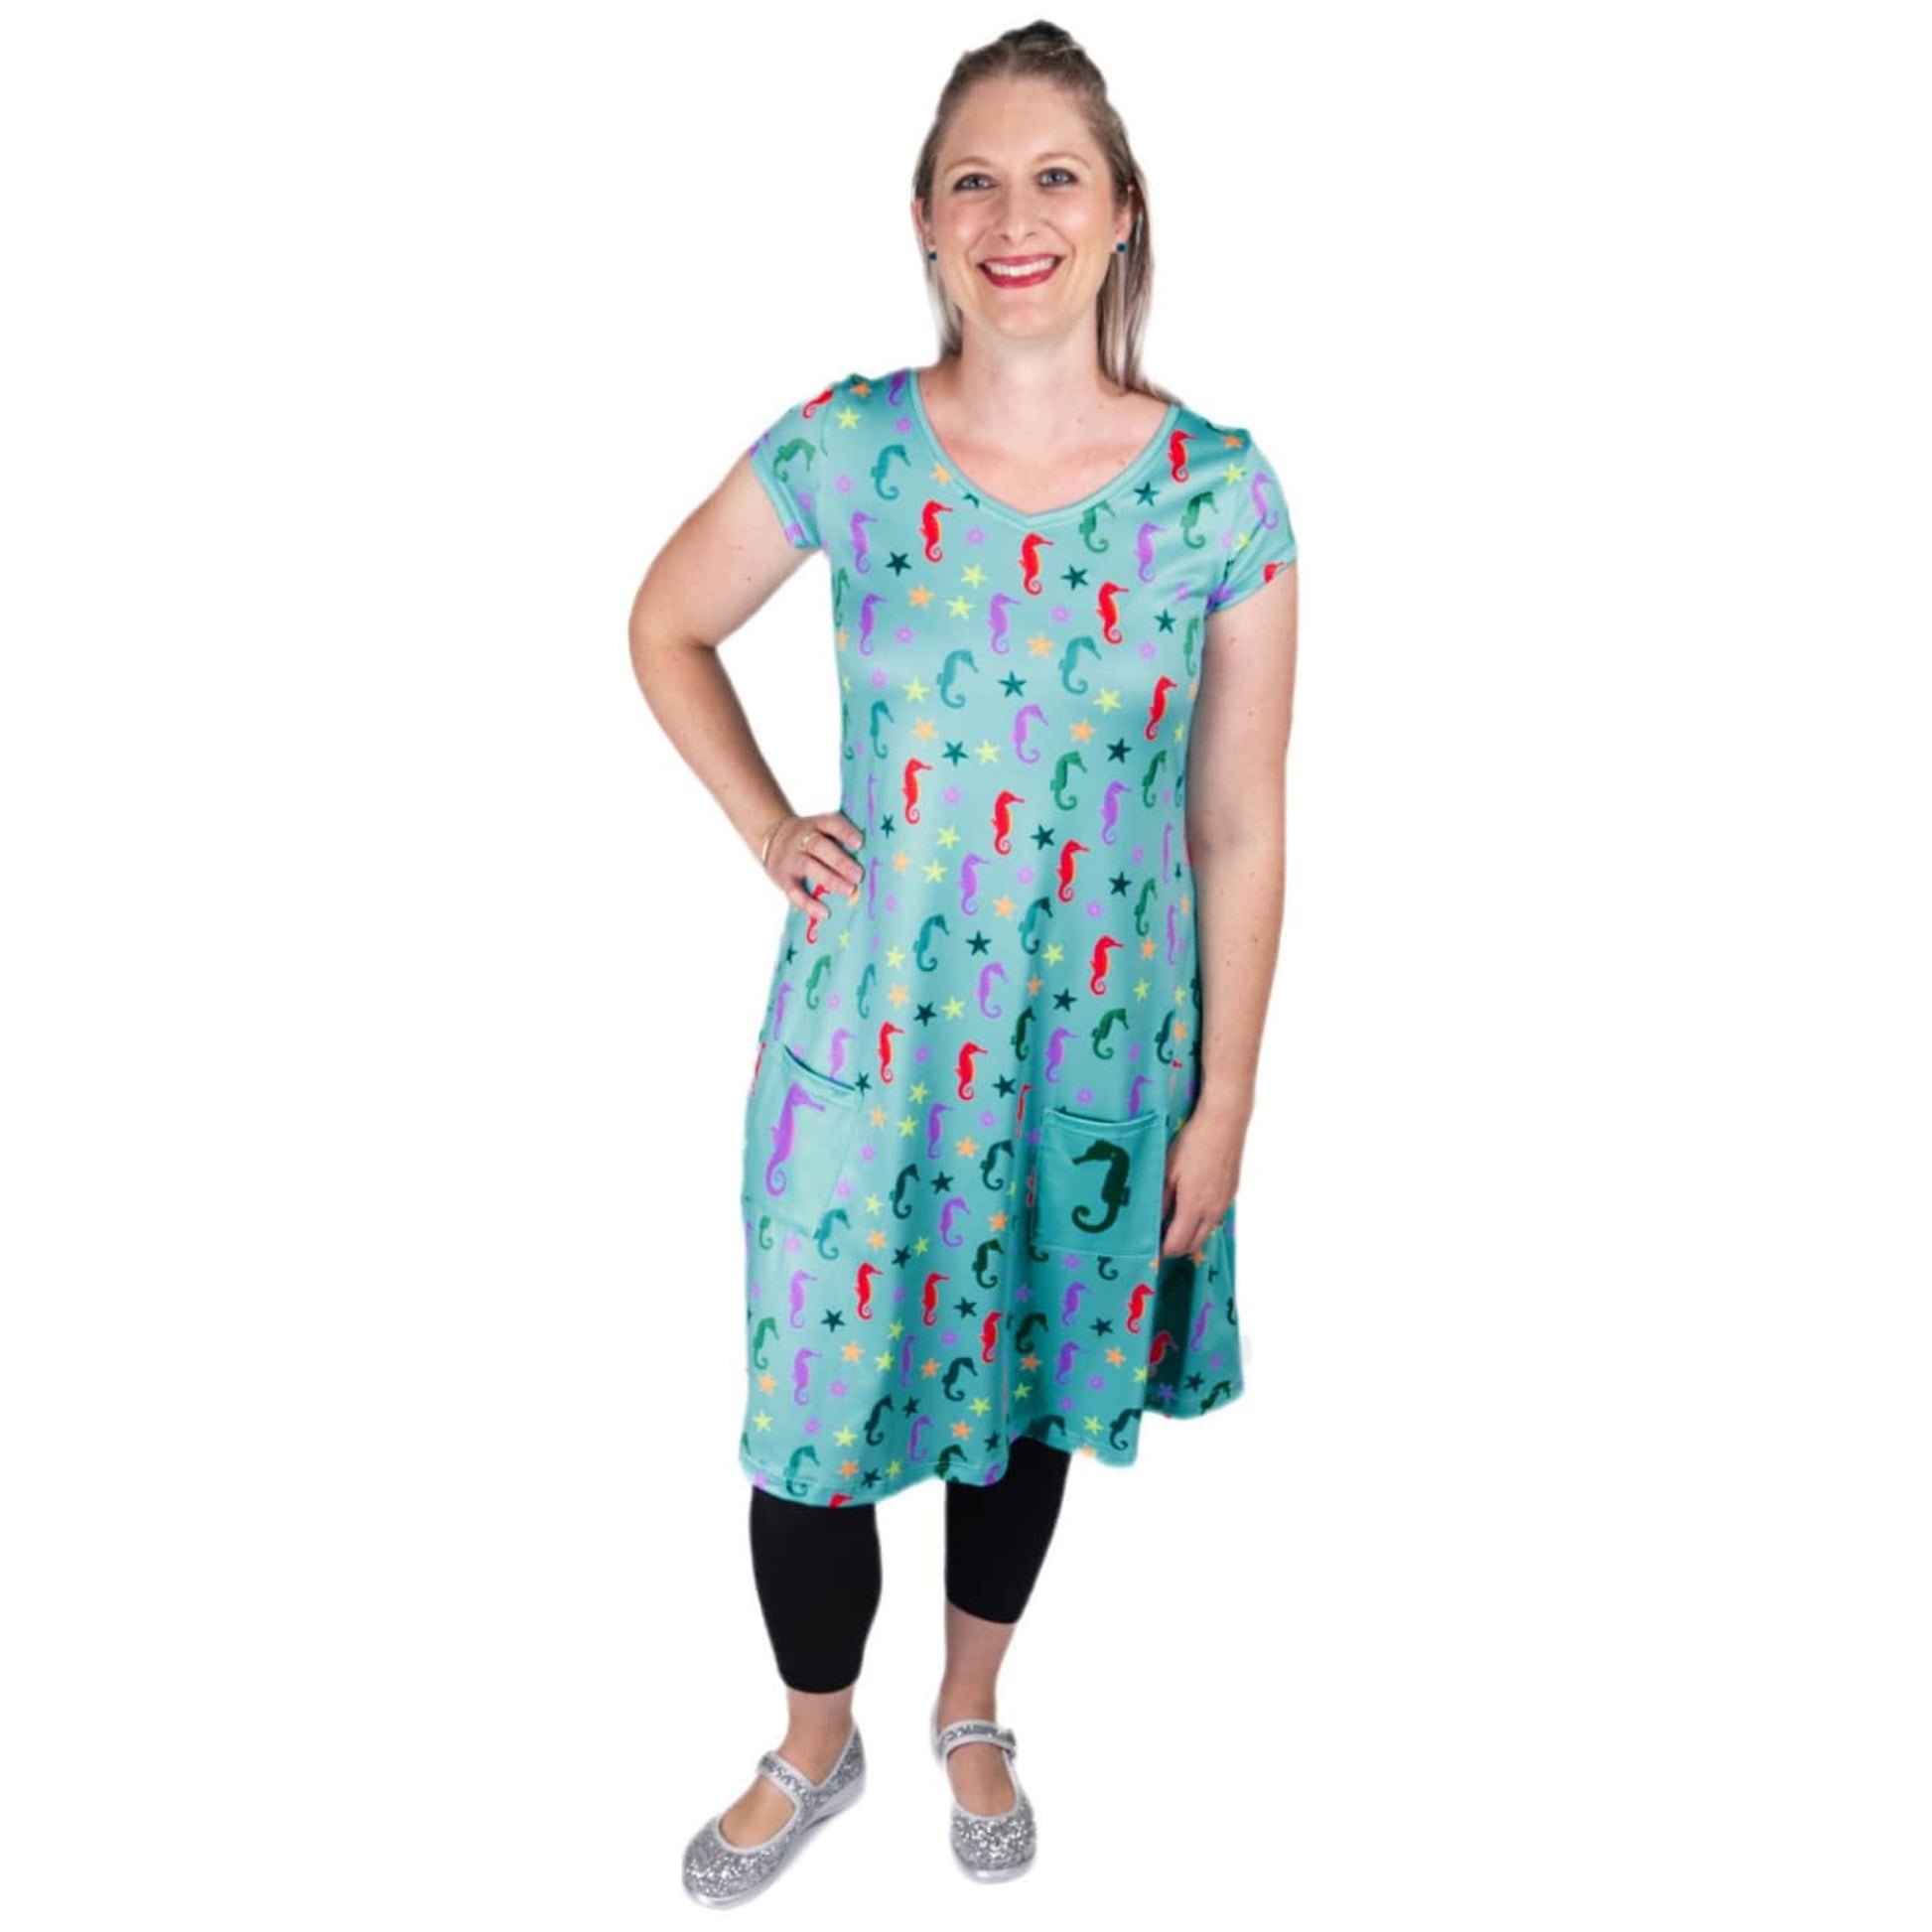 Oceania Tunic Dress by RainbowsAndFairies.com.au (Seahorse - Starfish - Under The Sea - Ocean - Vintage Inspired - Kitsch - Dress With Pockets - Mod) - SKU: CL_TUNDR_OCEAN_ORG - Pic-03